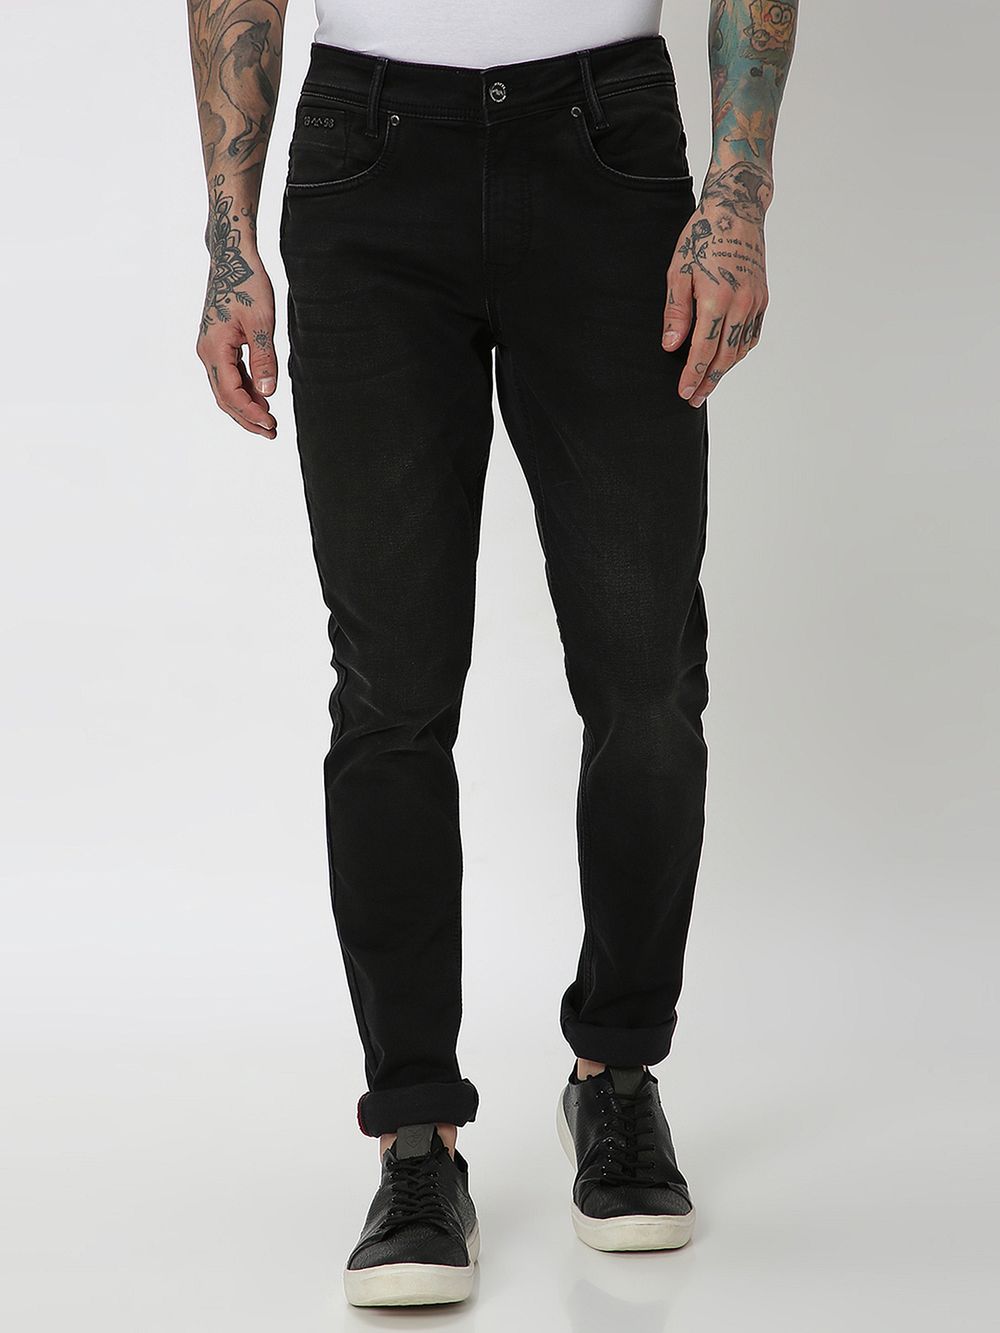 Black Skinny Fit Denim Deluxe Stretch Jeans